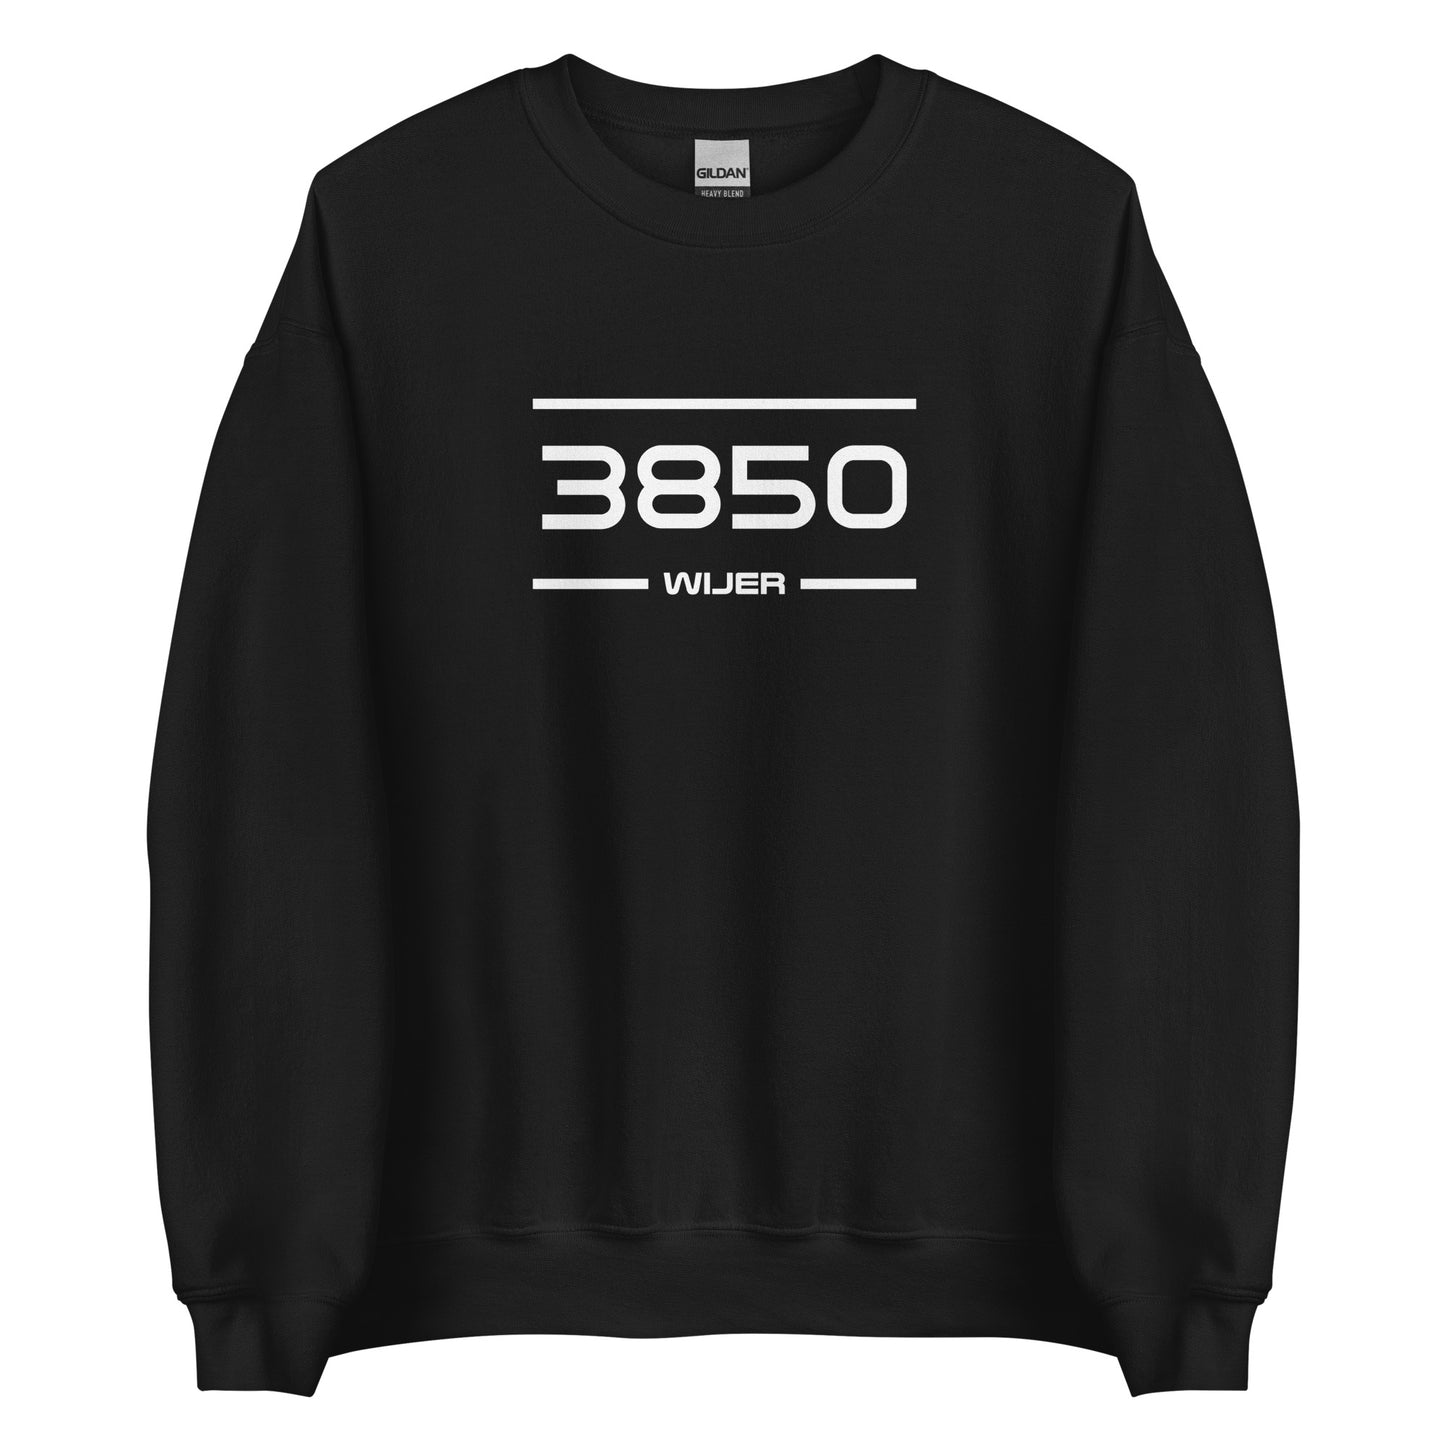 Sweater - 3850 - Wijer (M/V)